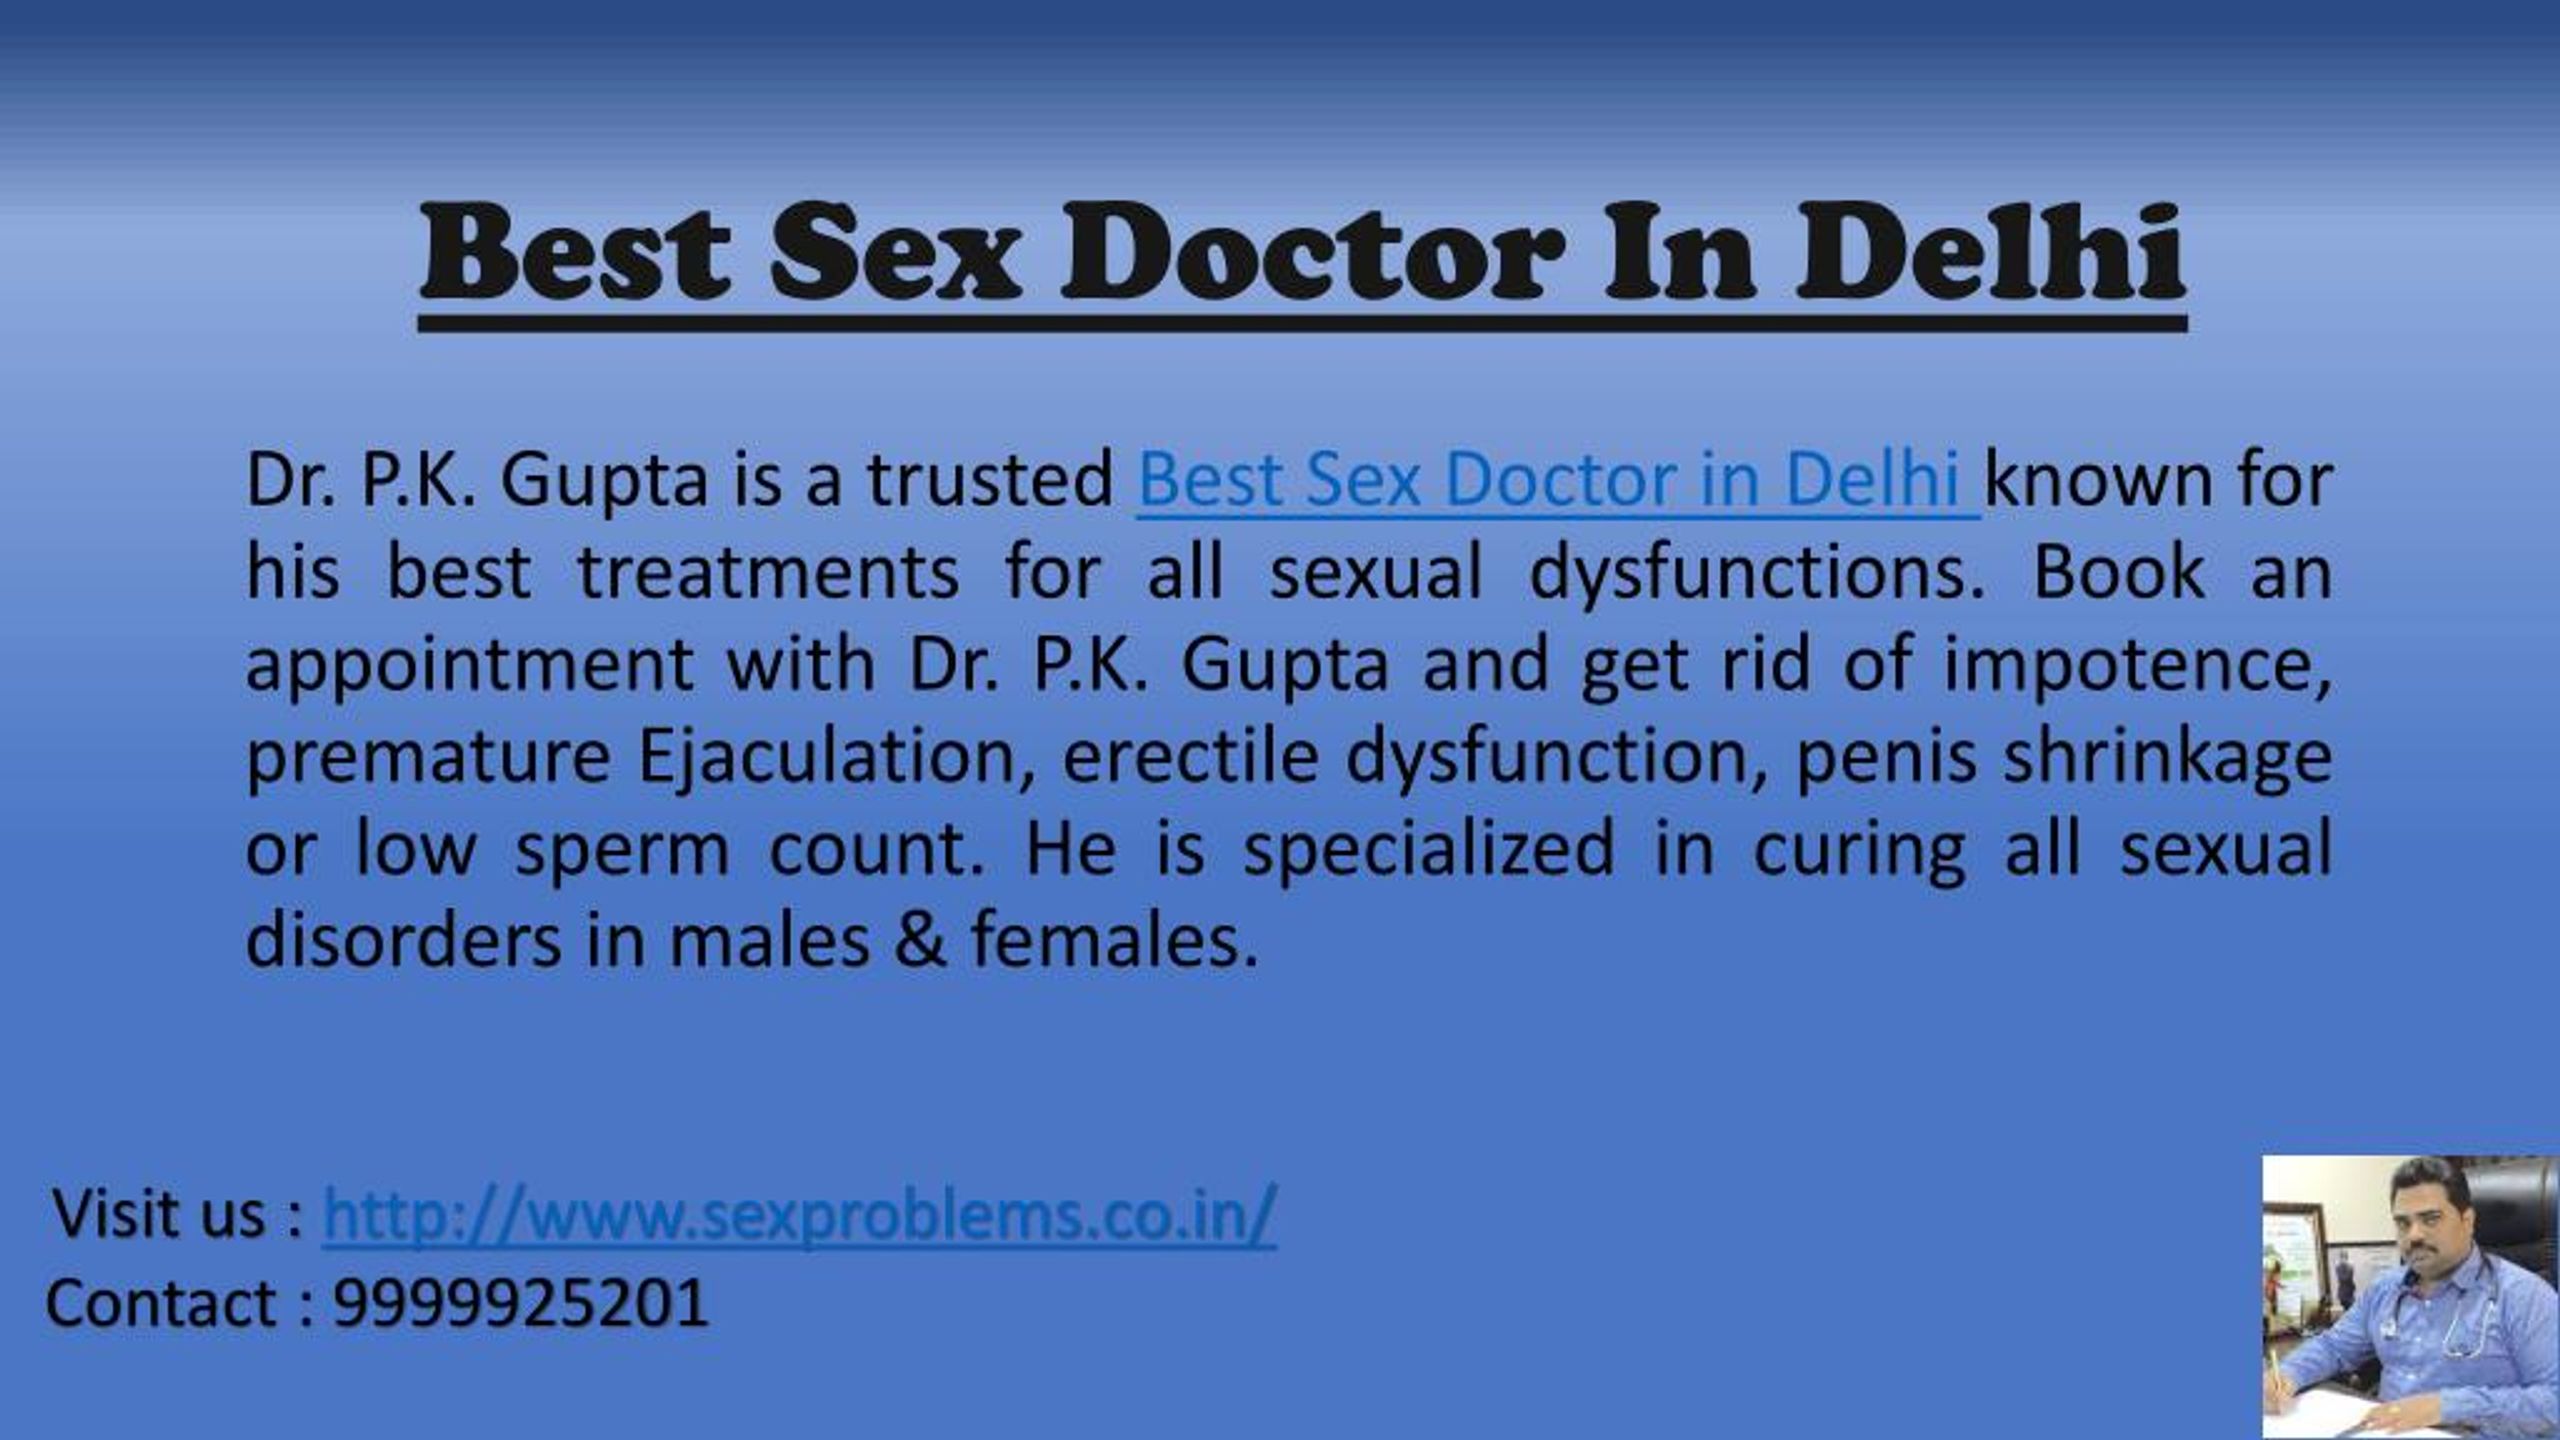 Ppt Best Sexologist In Delhi Powerpoint Presentation Free Download Id7484179 9895